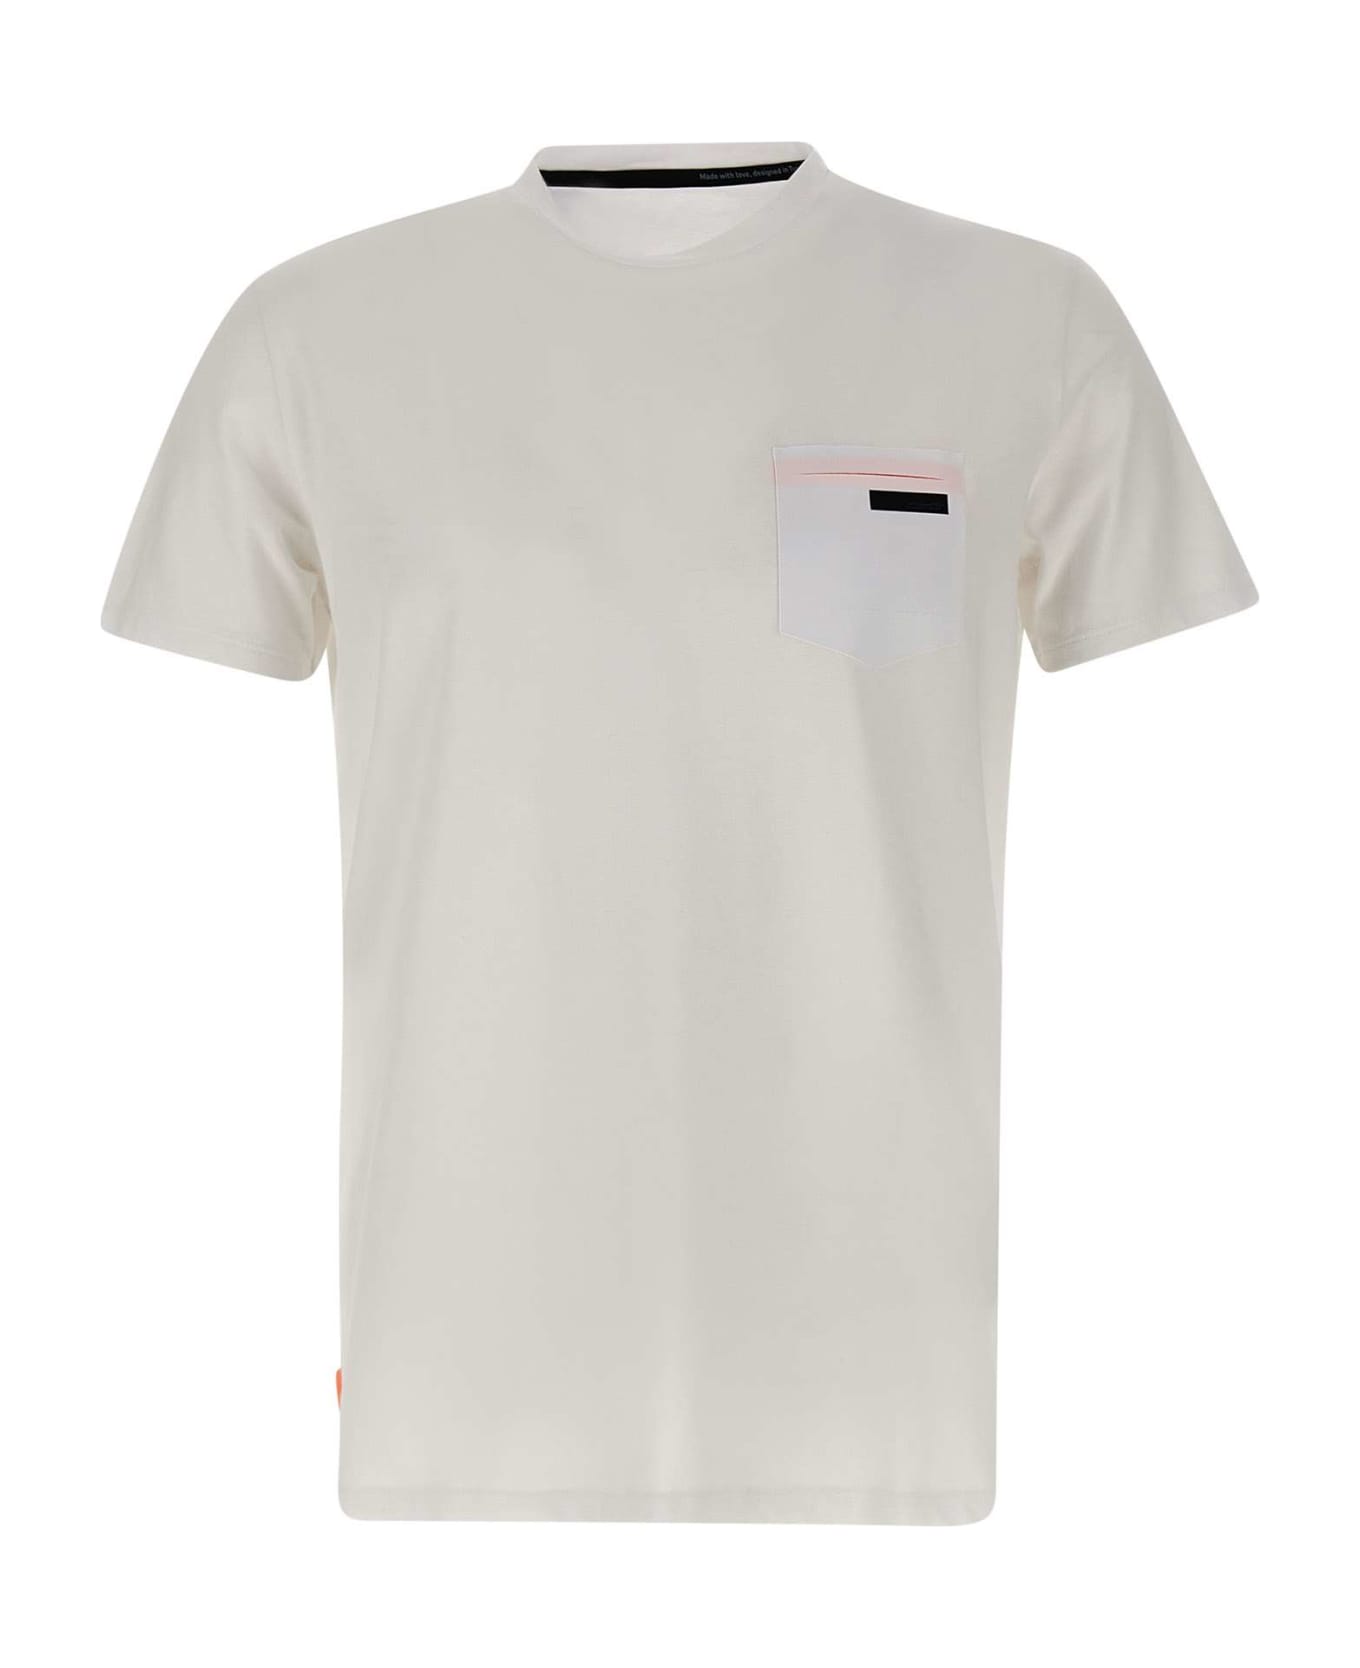 RRD - Roberto Ricci Design 'revo Shirty' T-shirt RRD - Roberto Ricci Design - WHITE